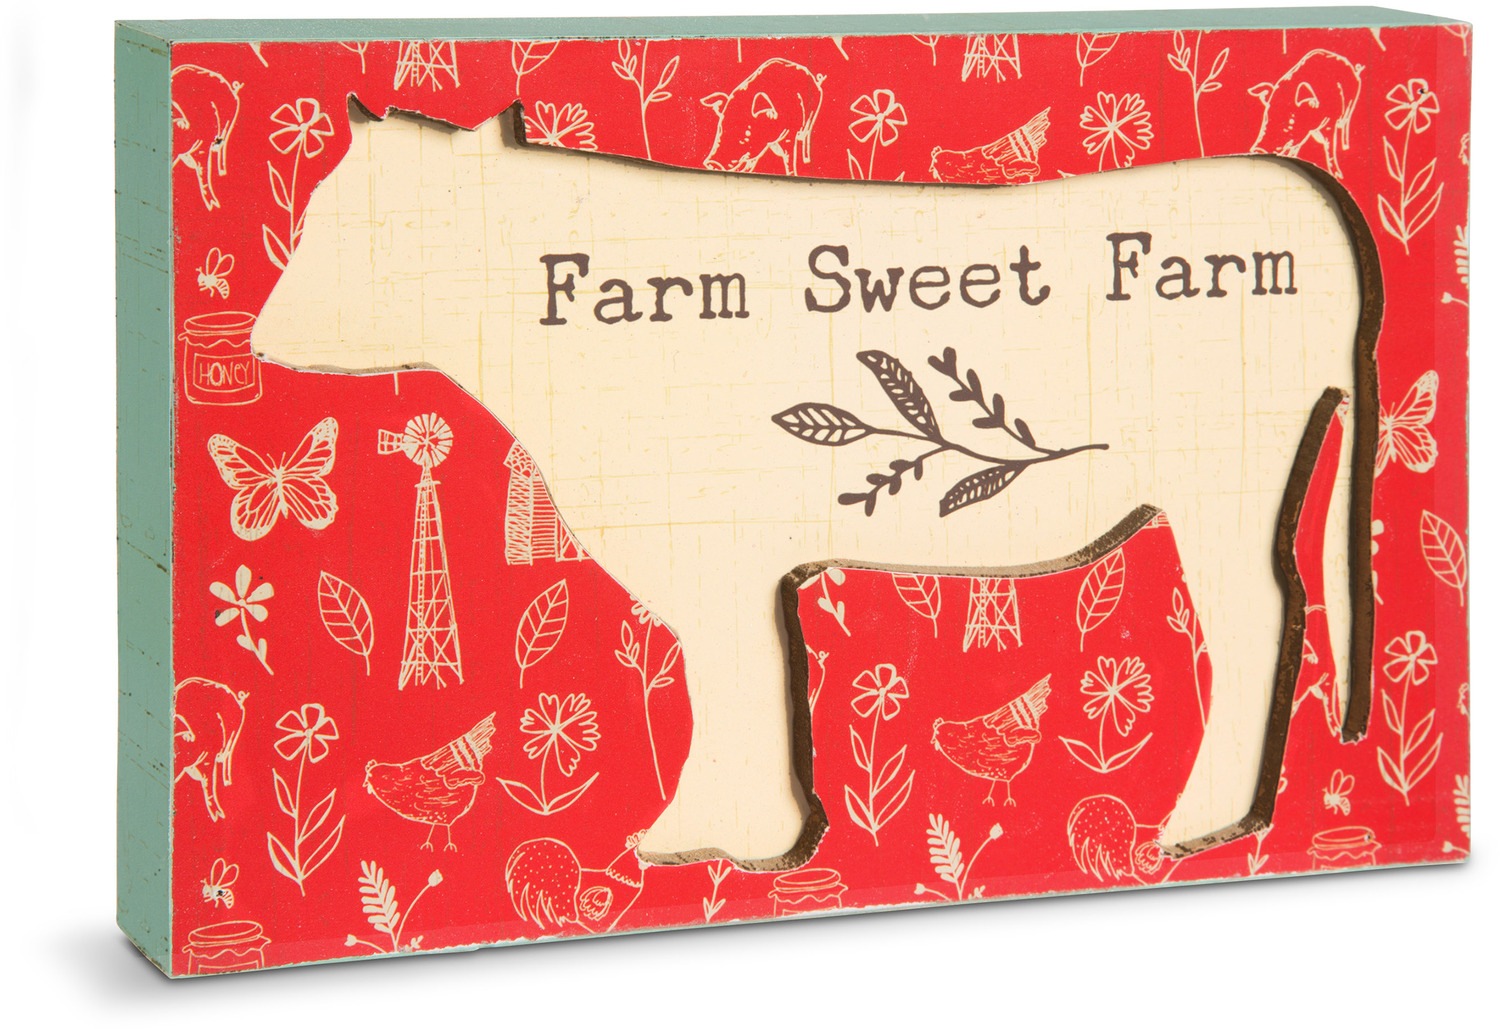 Farm Sweet Farm by Live Simply by Amylee - Farm Sweet Farm - 7" x 4.5" Plaque